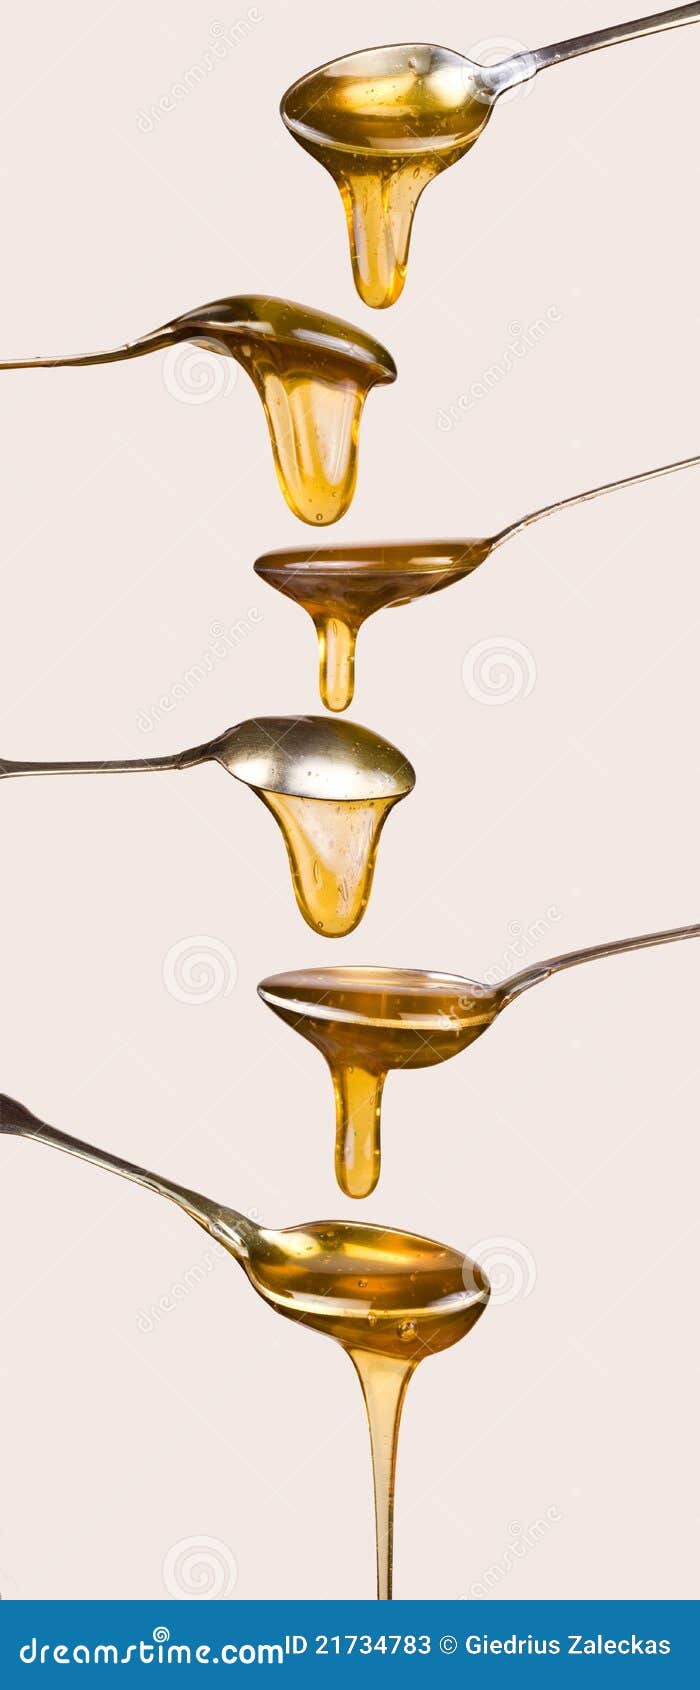 honey dripping clipart - photo #34